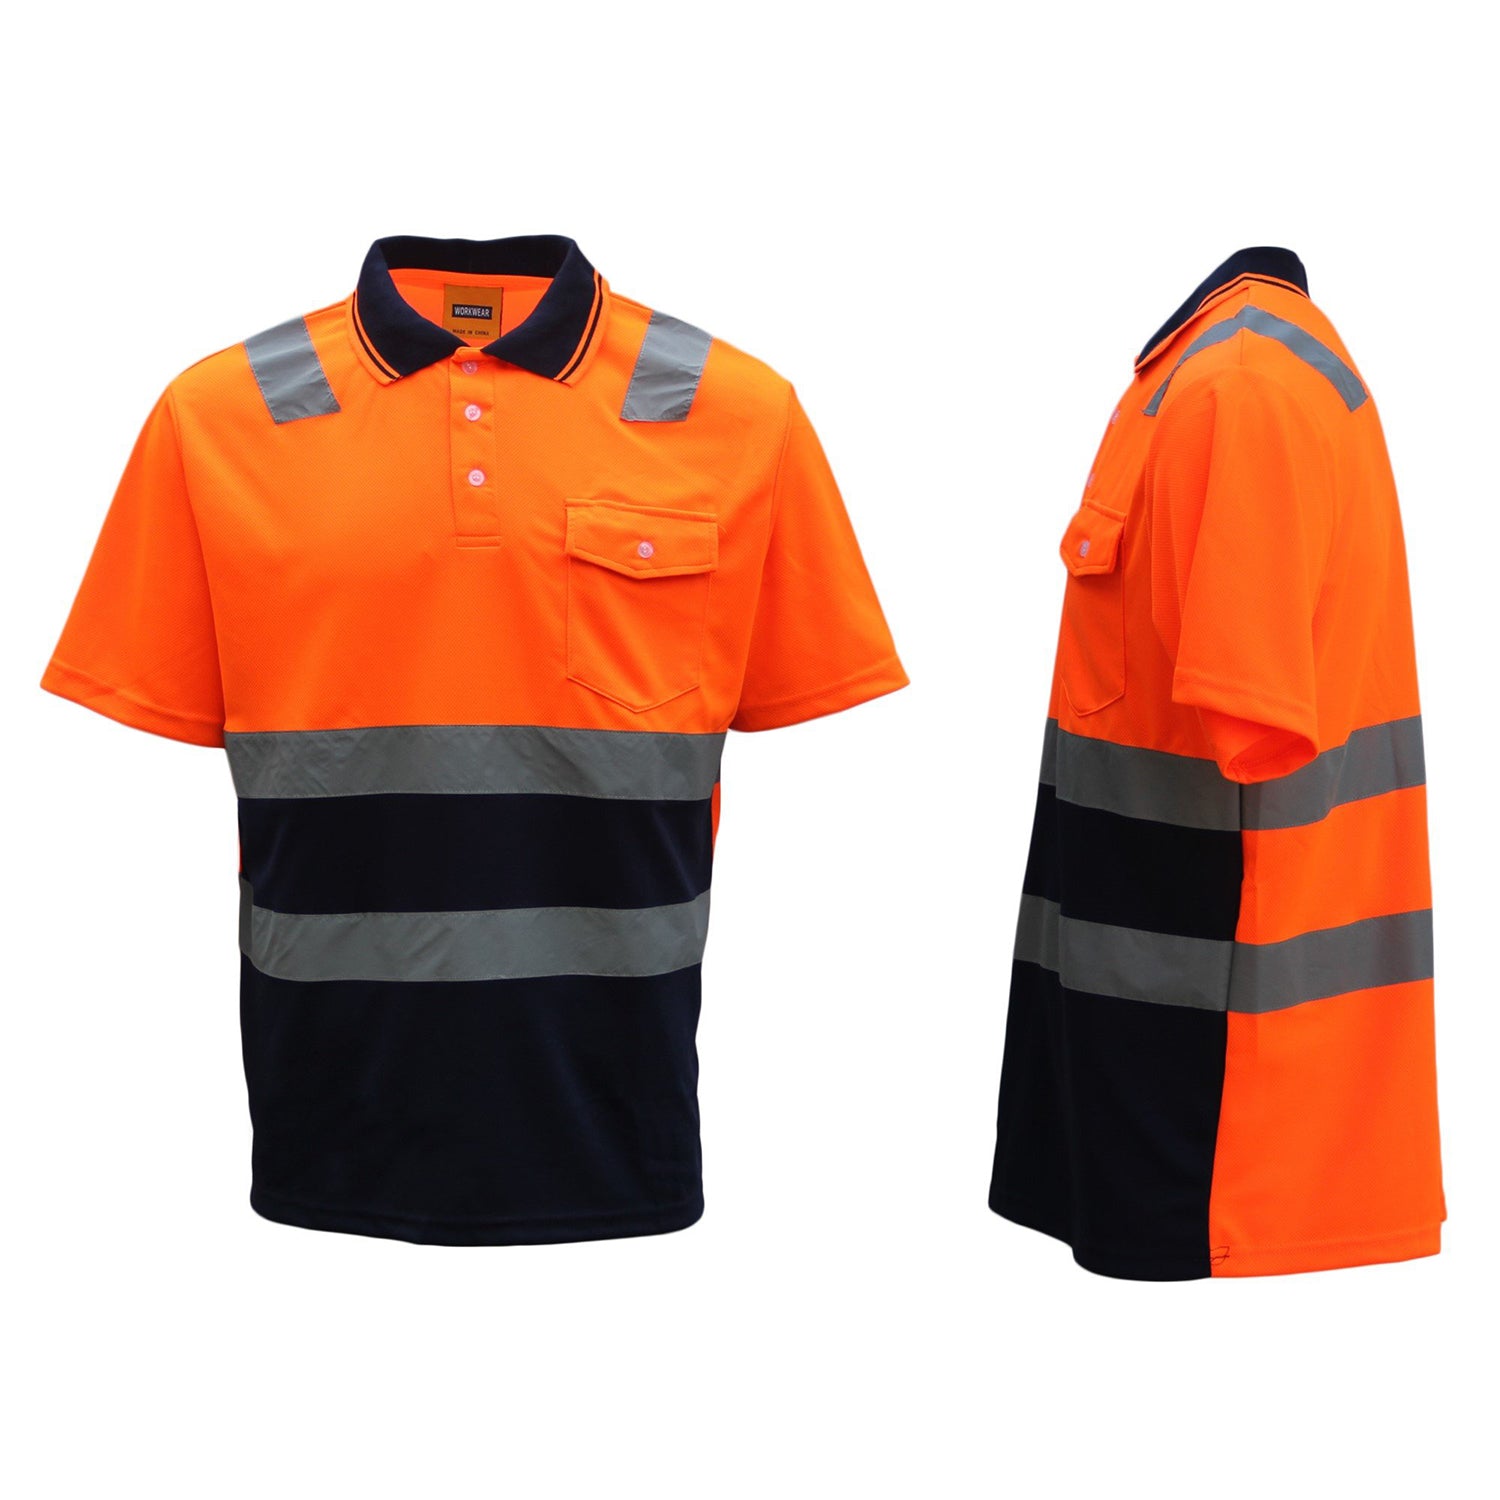 HI VIS Short Sleeve Workwear Shirt w Reflective Tape Cool Dry Safety Polo 2 Tone, Fluoro Orange / Navy, L